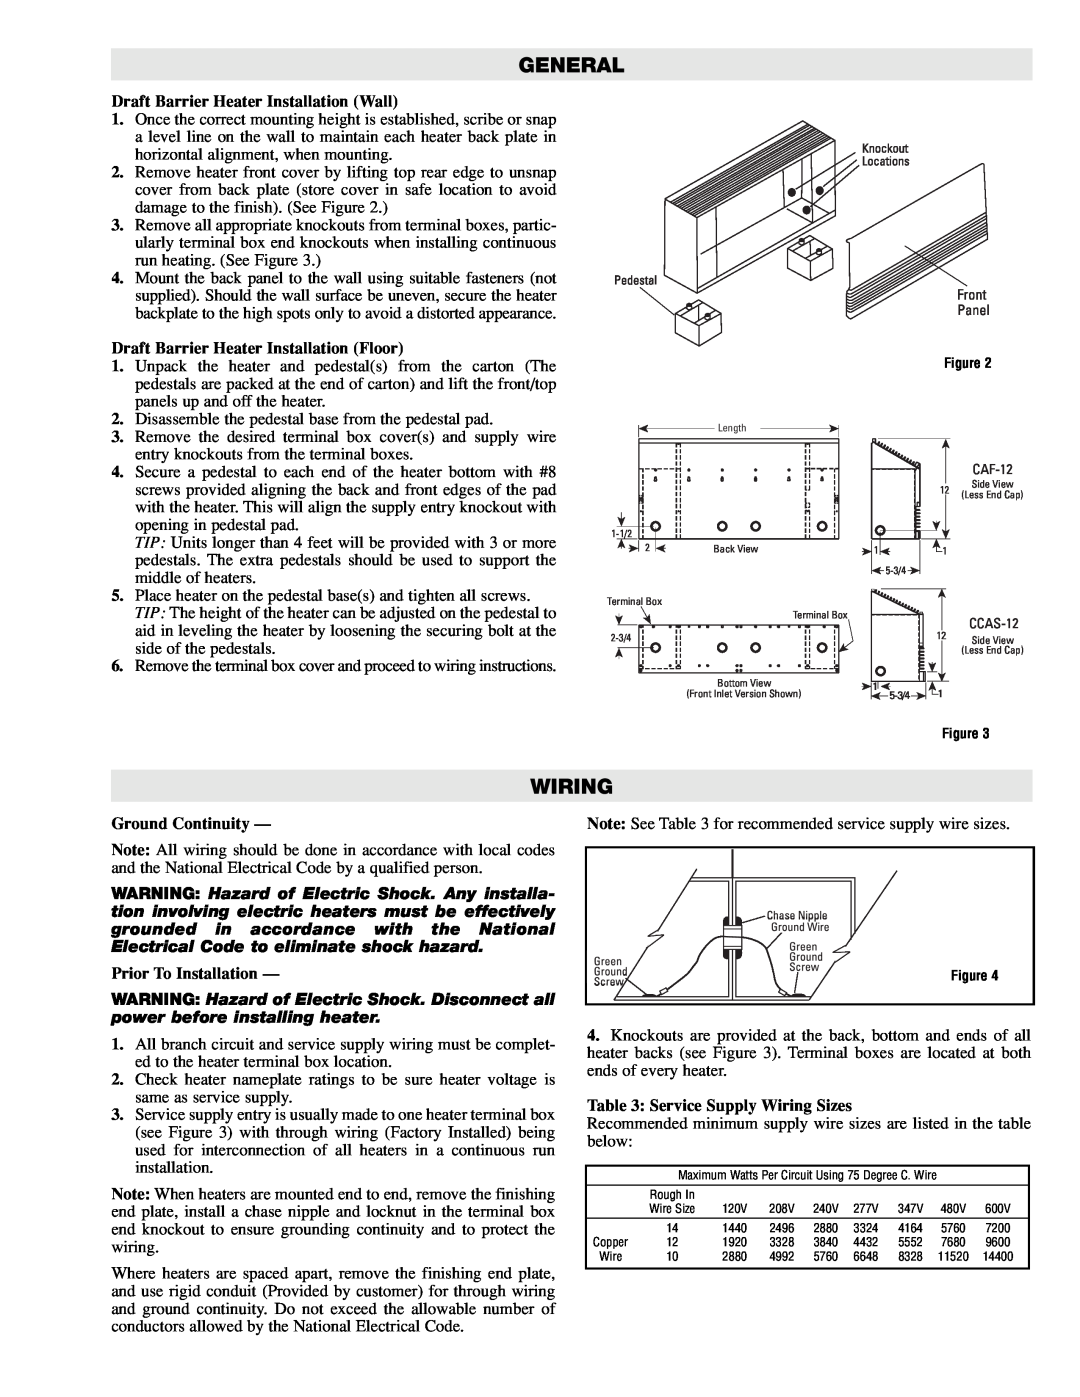 Chromalox CAF-12, CCAS-12 Wiring, Draft Barrier Heater Installation Wall, Draft Barrier Heater Installation Floor, General 